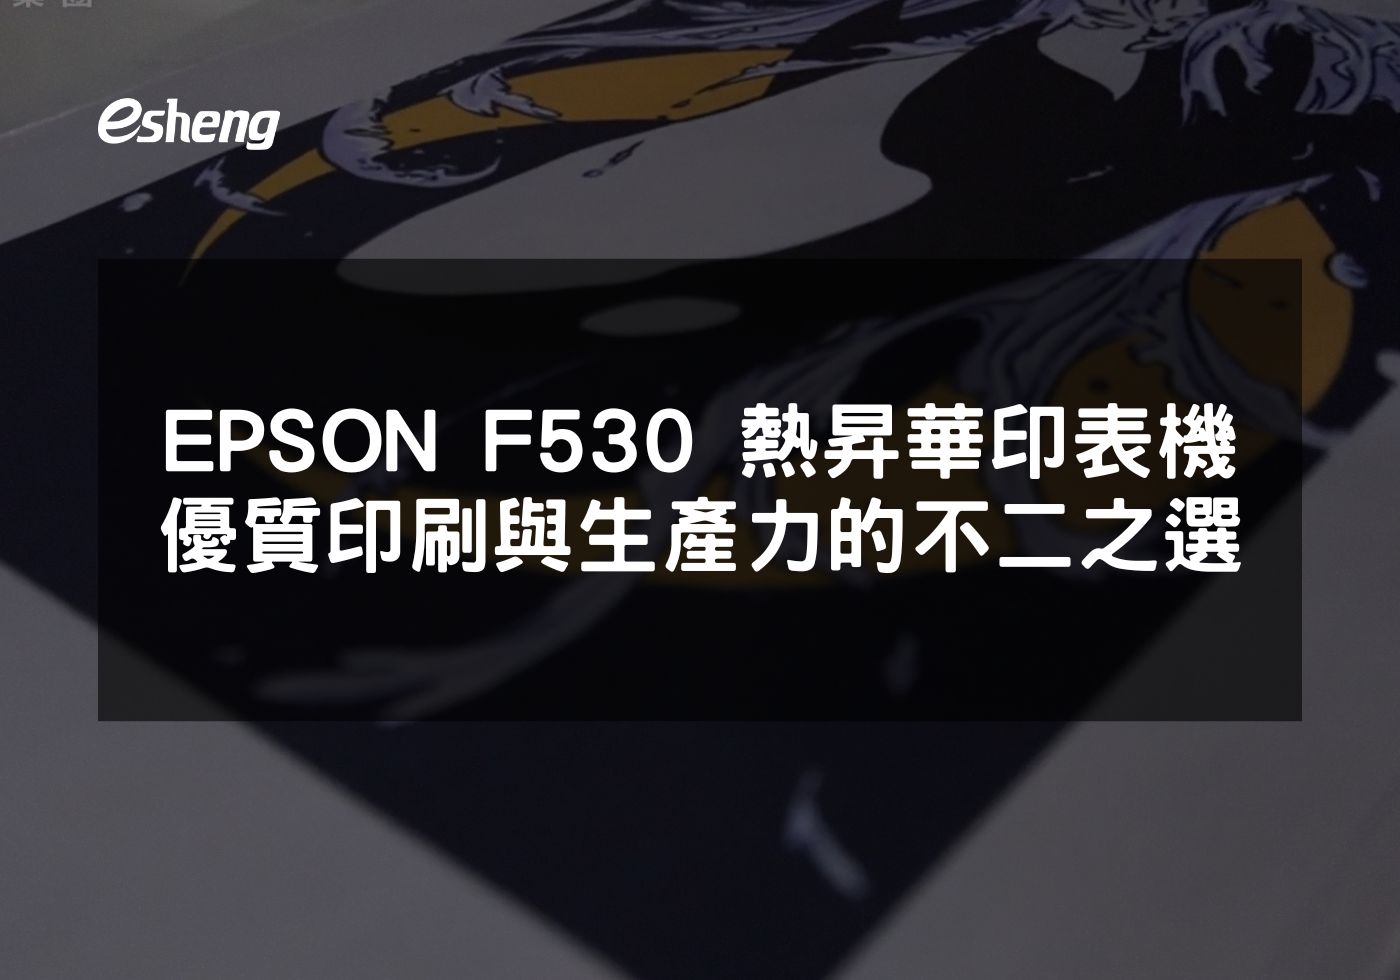 EPSON F530 熱昇華印表機 優質印刷品質與高效生產力的不二之選